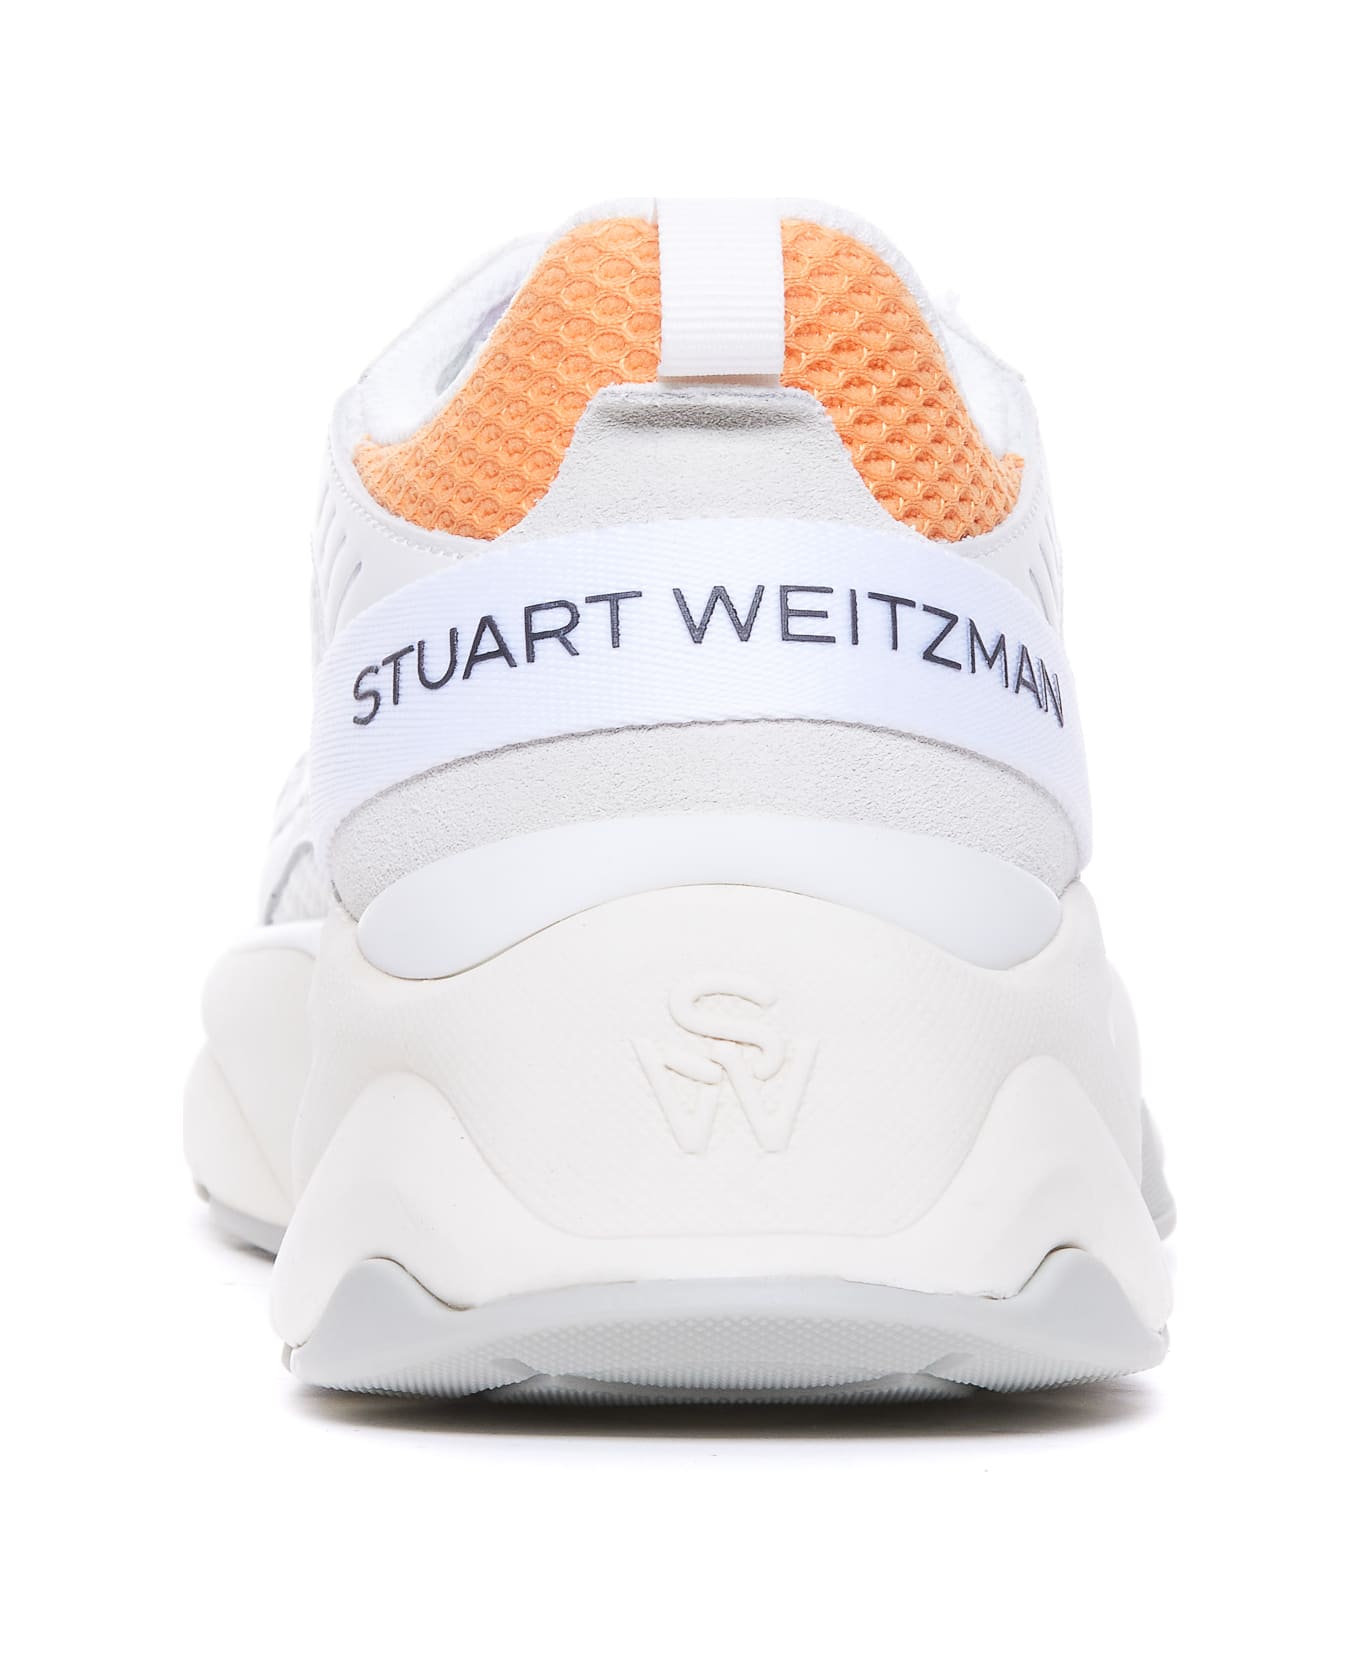 Stuart Weitzman Sw Trainer Sneakers - White スニーカー